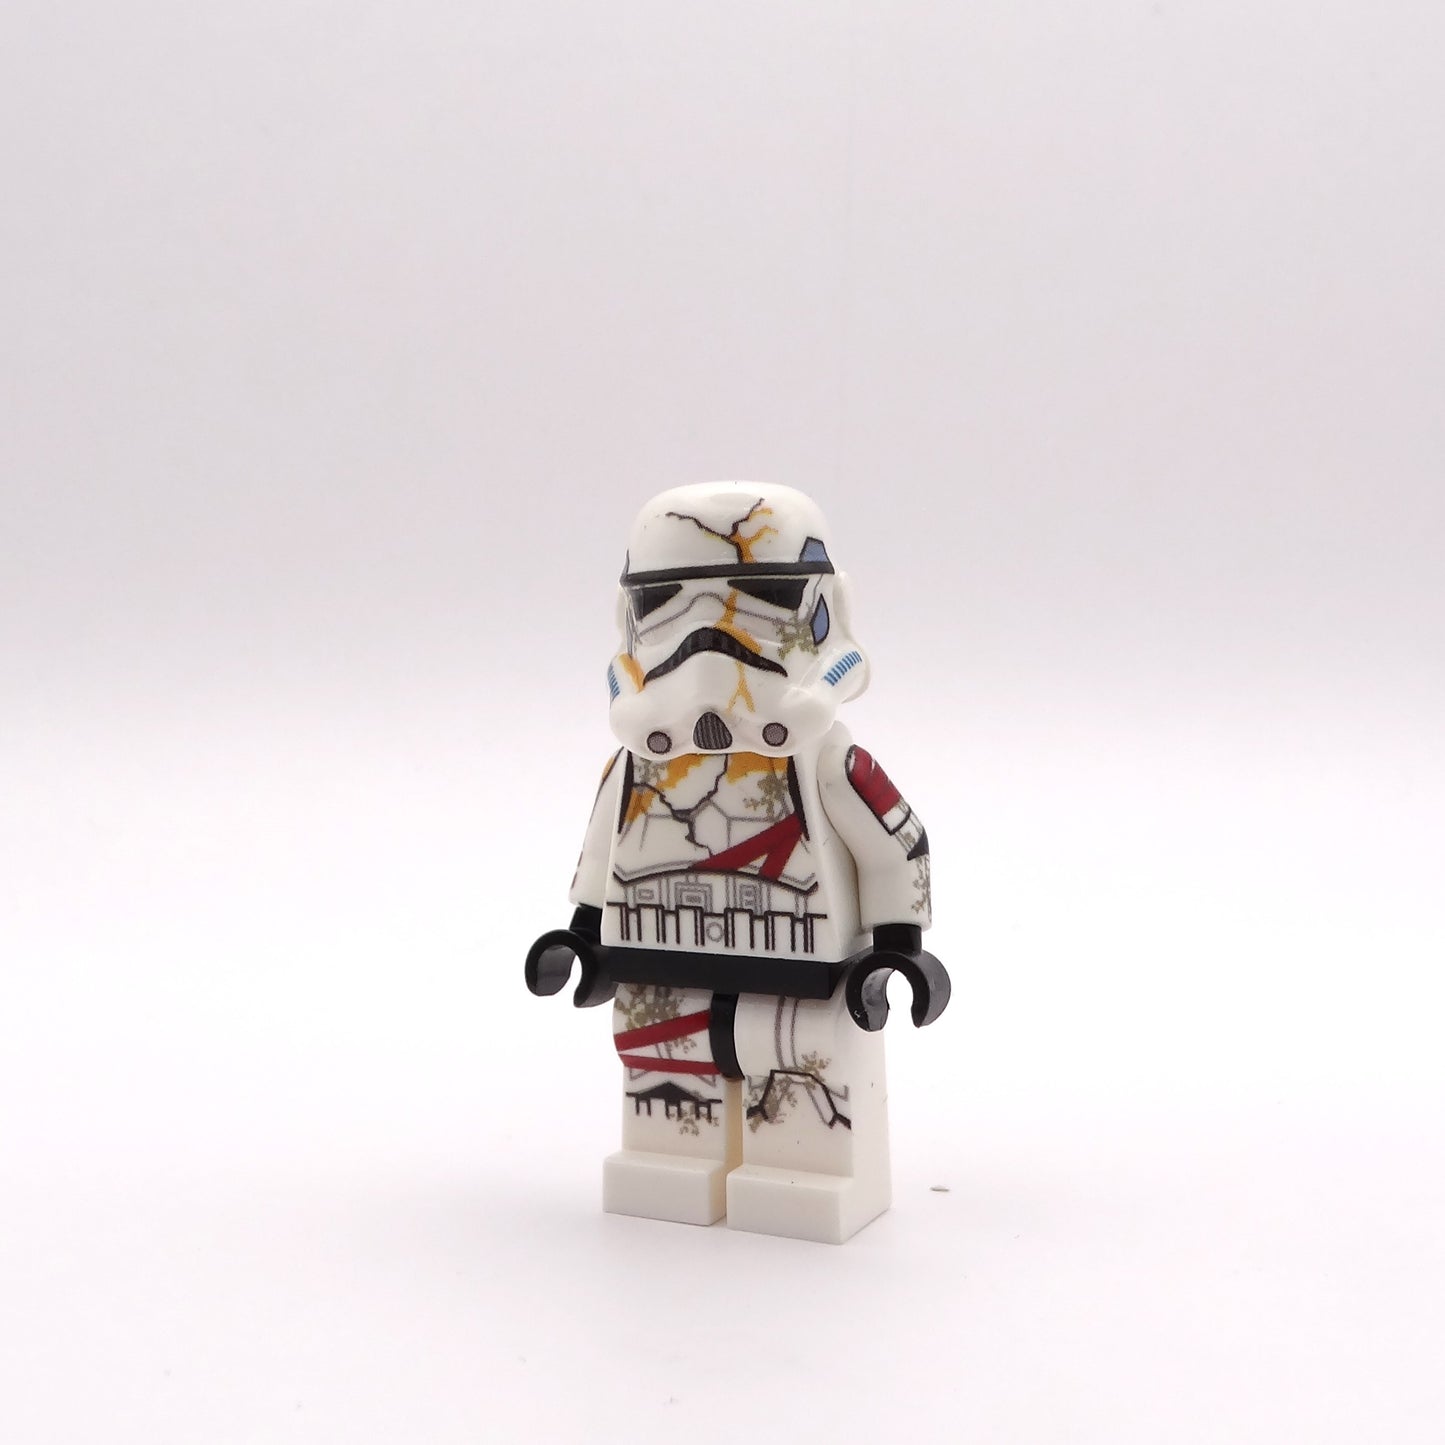 Night Trooper 6 Minifigure